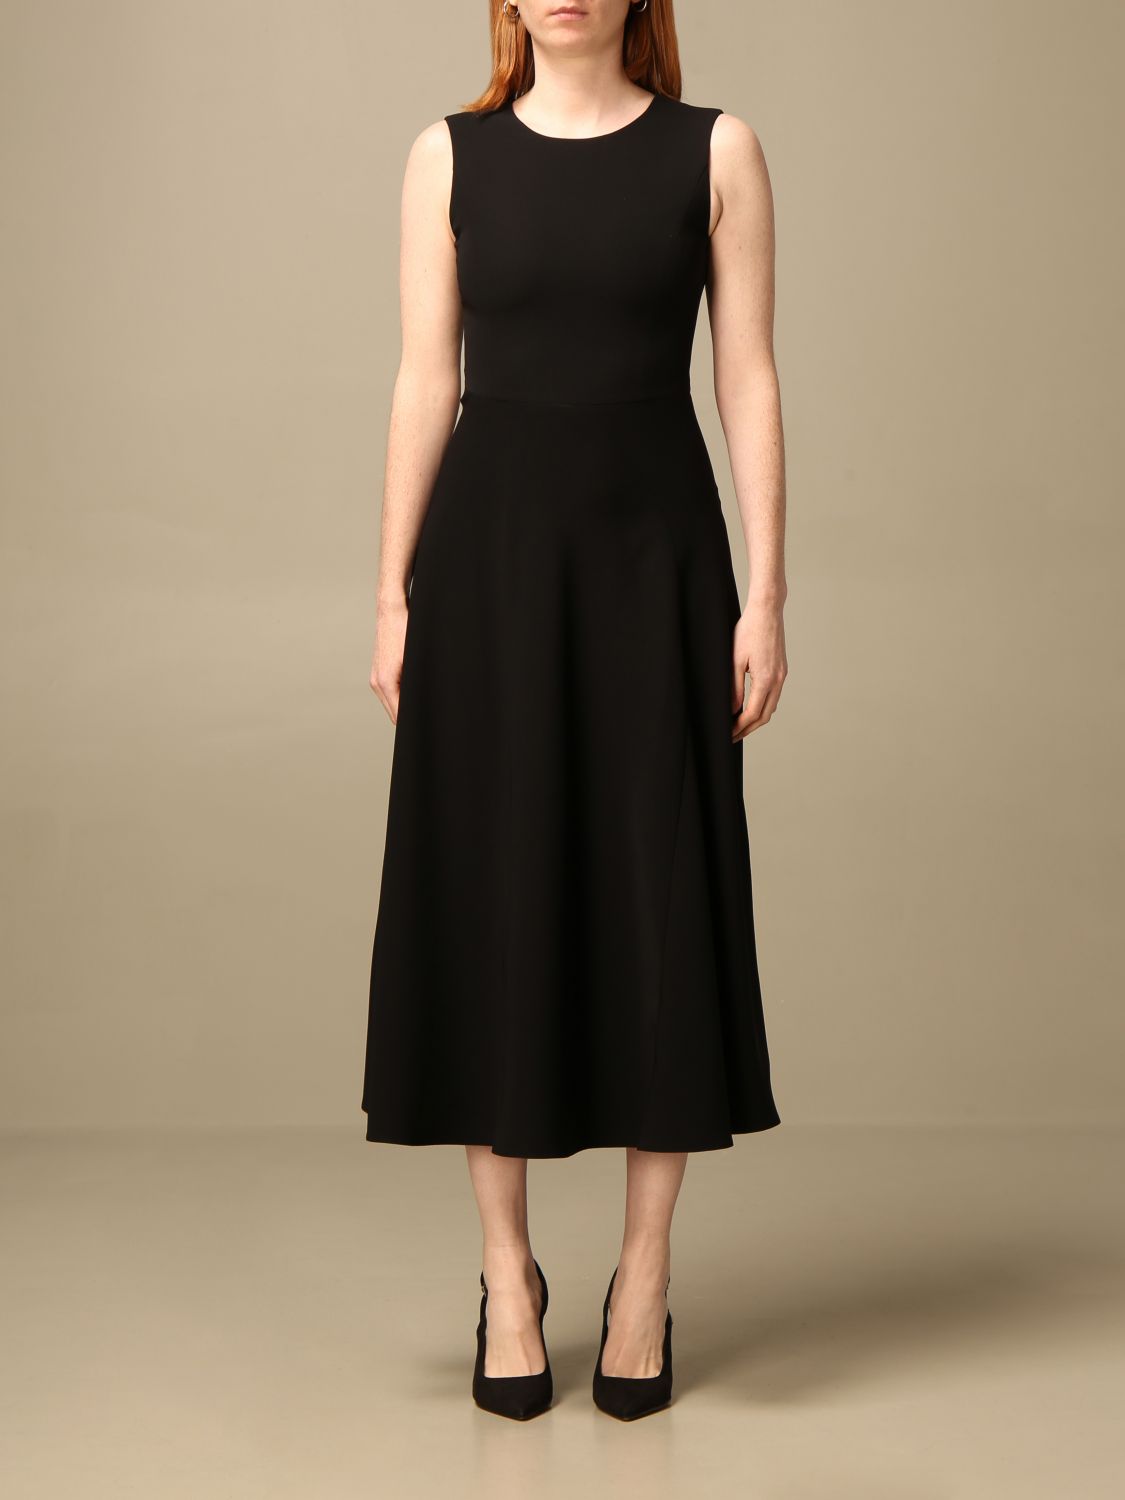 EMPORIO ARMANI: cady midi dress - Black | Emporio Armani dress 3K2A86 2NWAZ  online on 